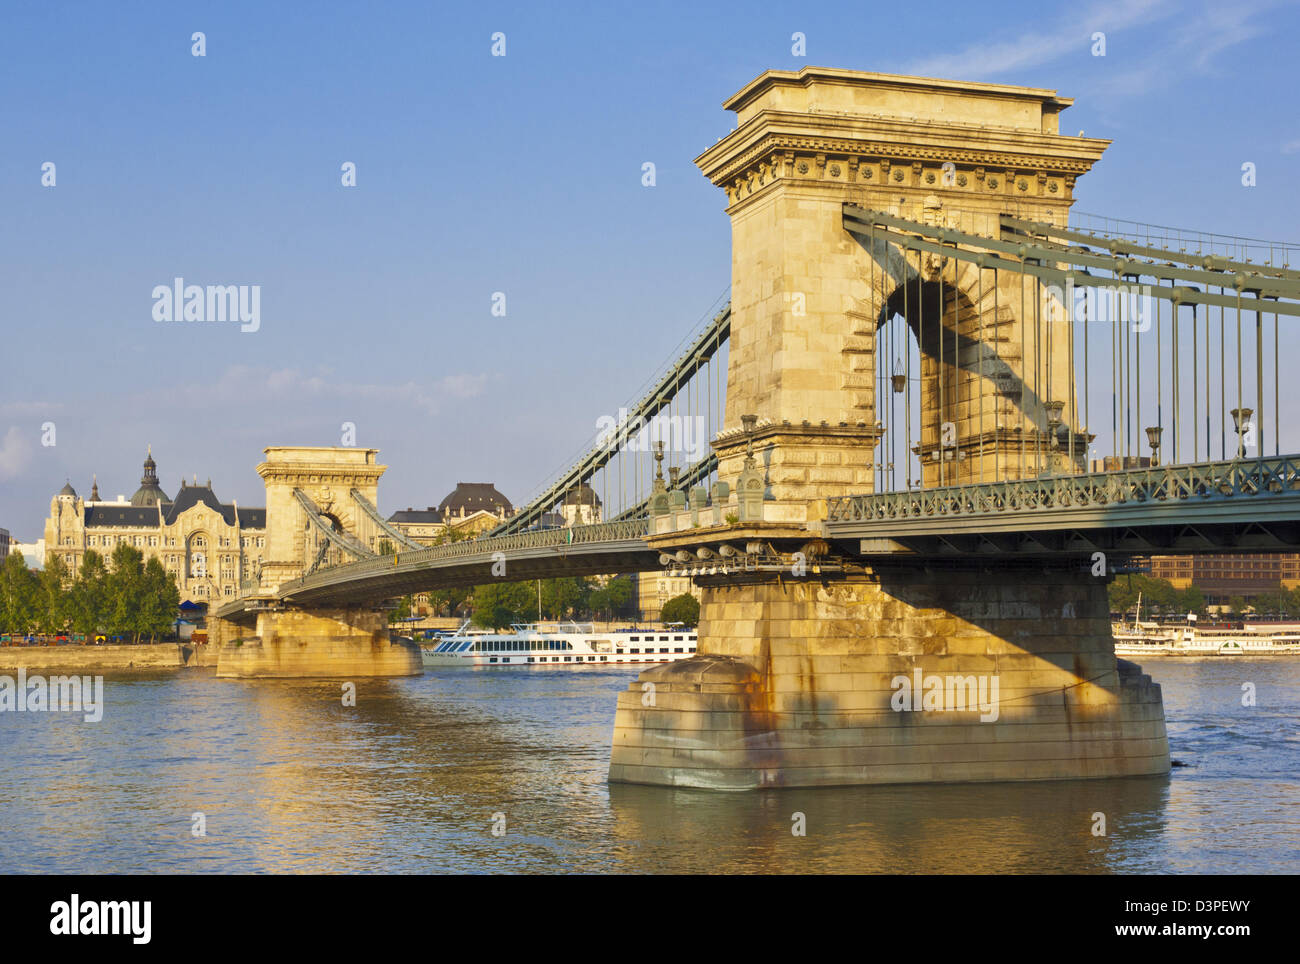 The Chain Bridge, Szechenyi Lanchid, over the river Danube Budapest Hungary eu Stock Photo